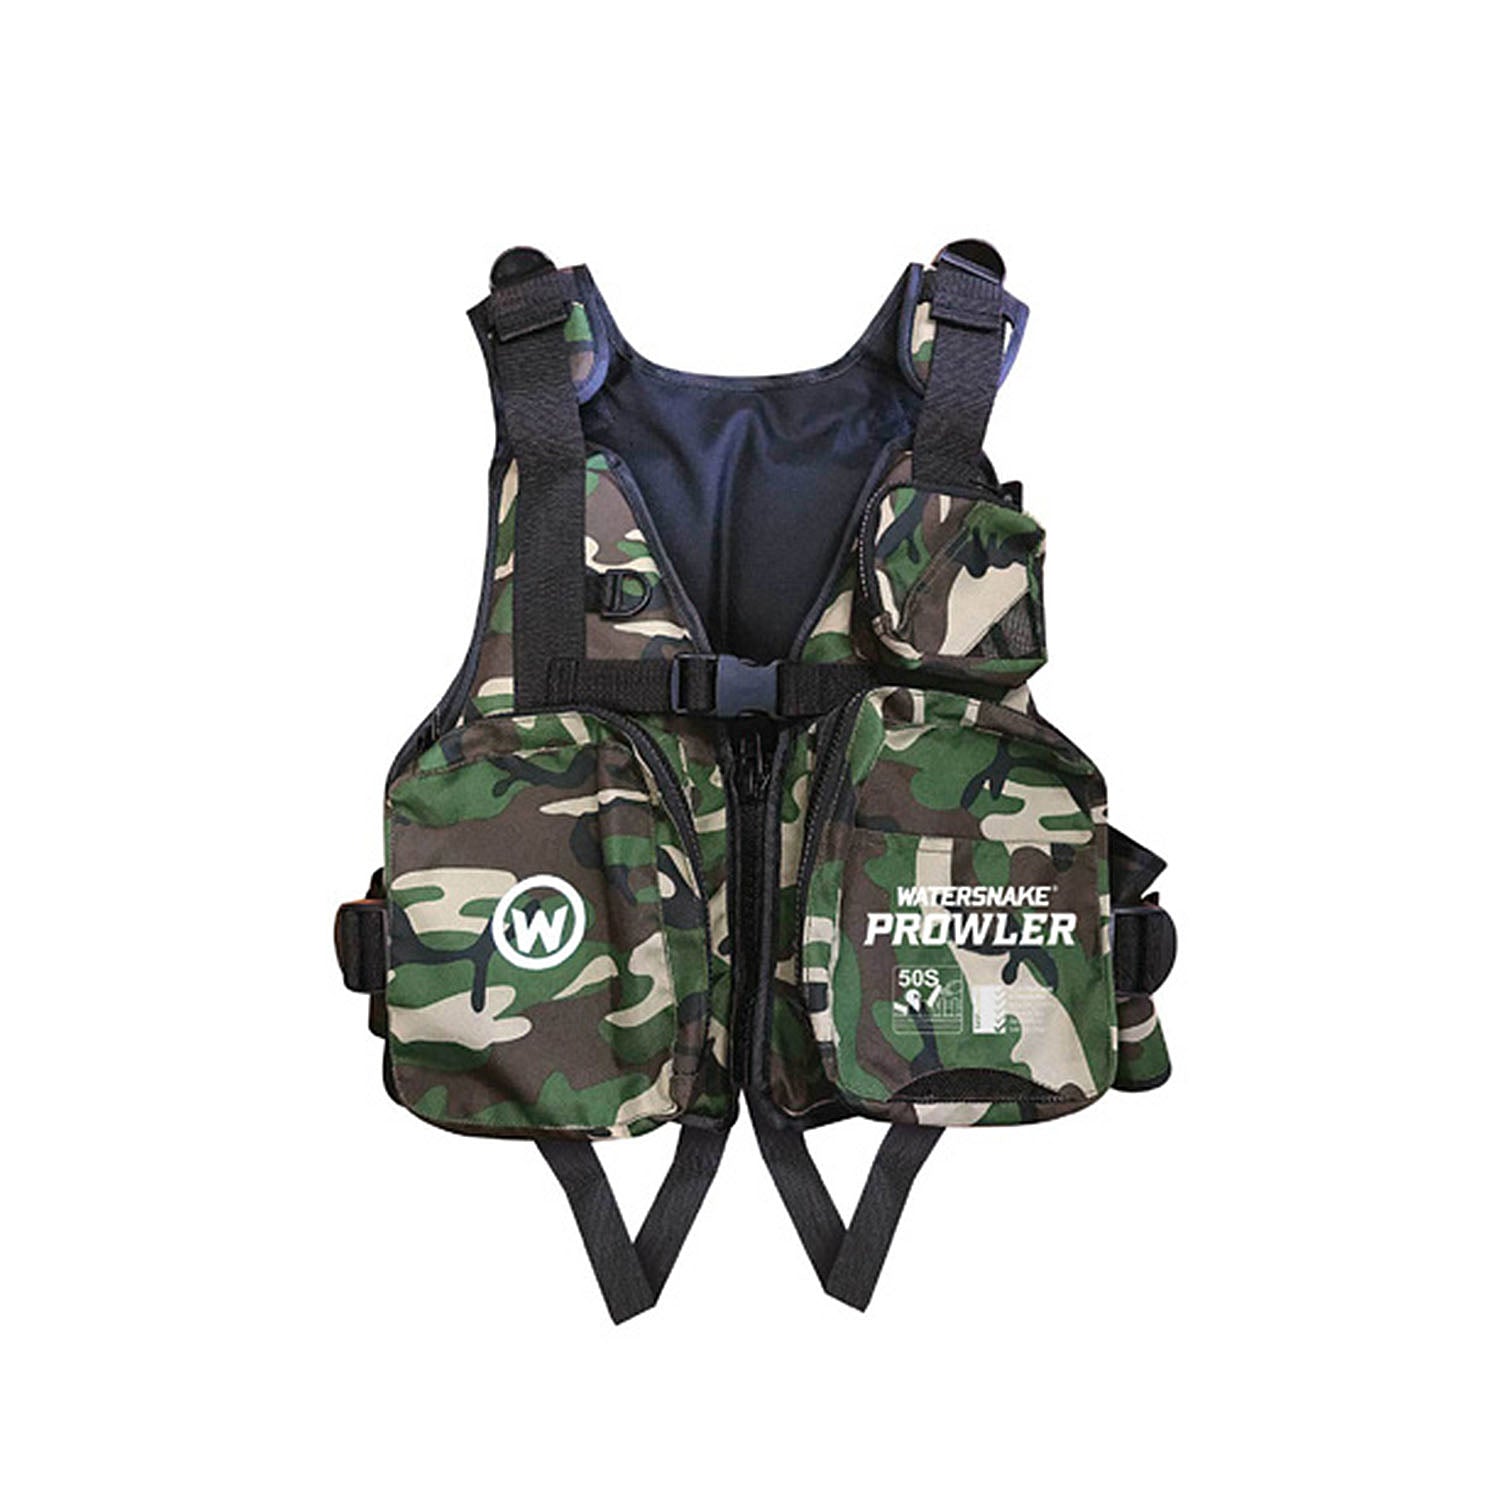 Prowler Kayak Vest